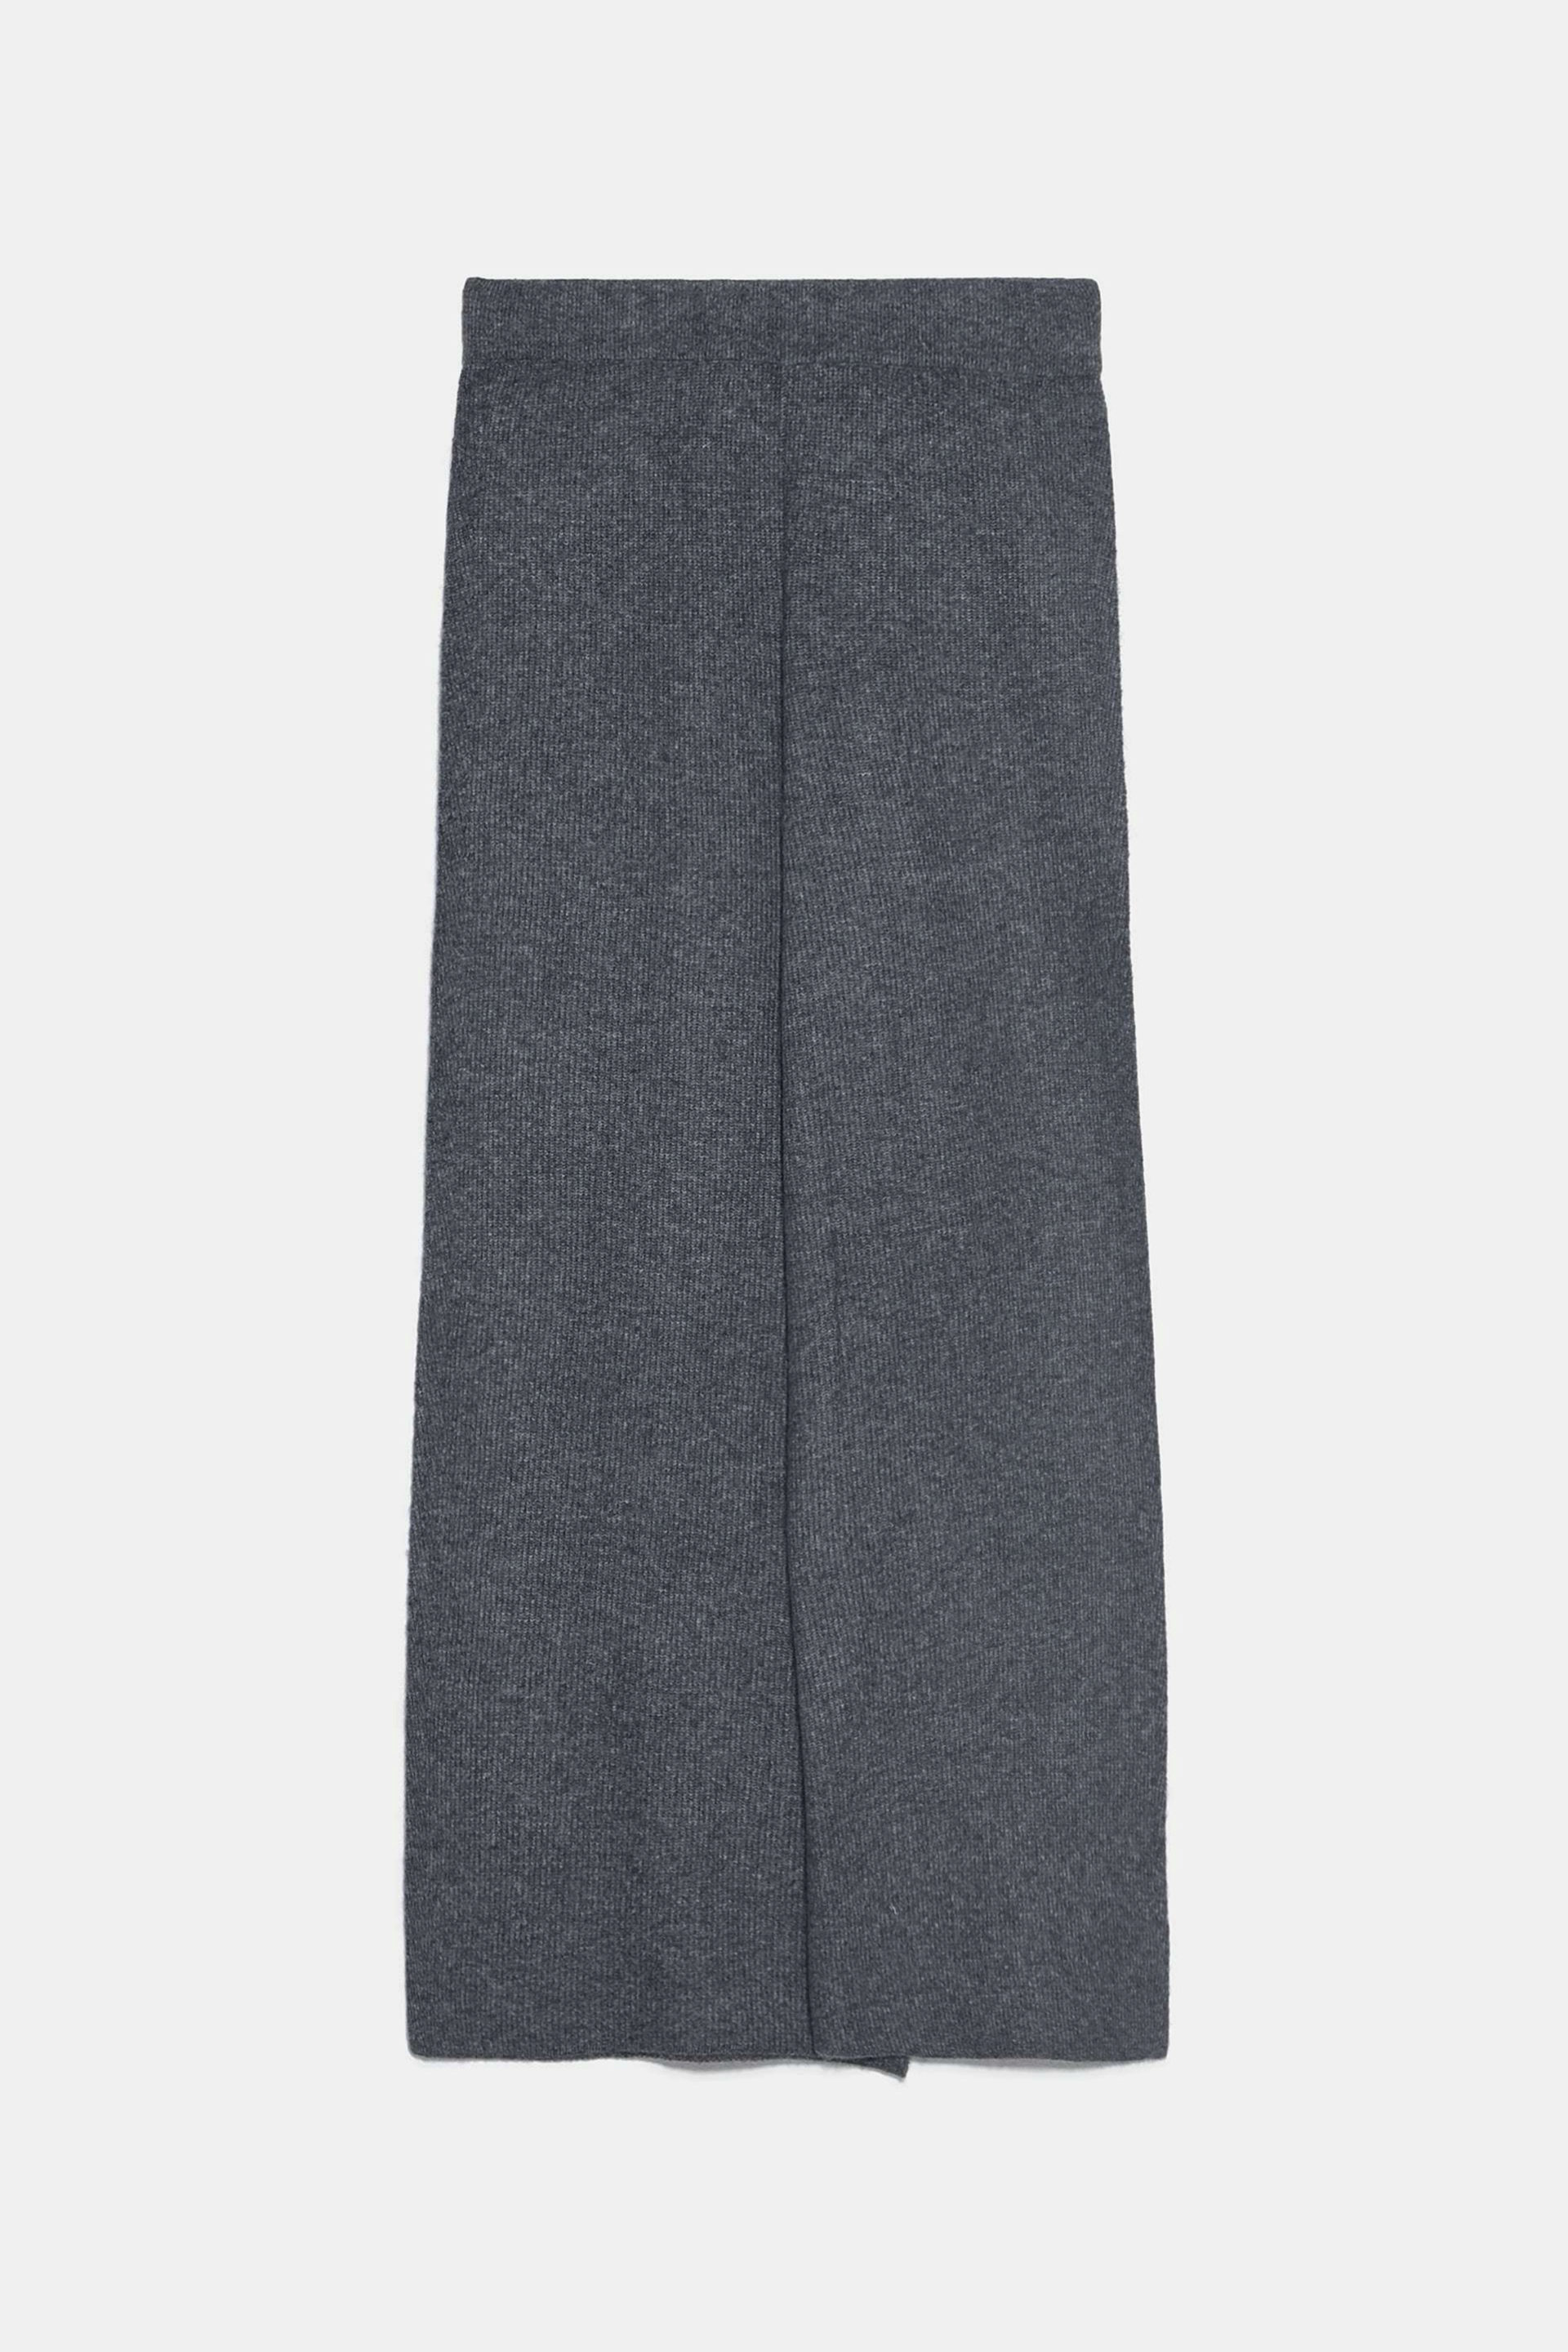 Pantaln culotte de punto de Zara (39,95)